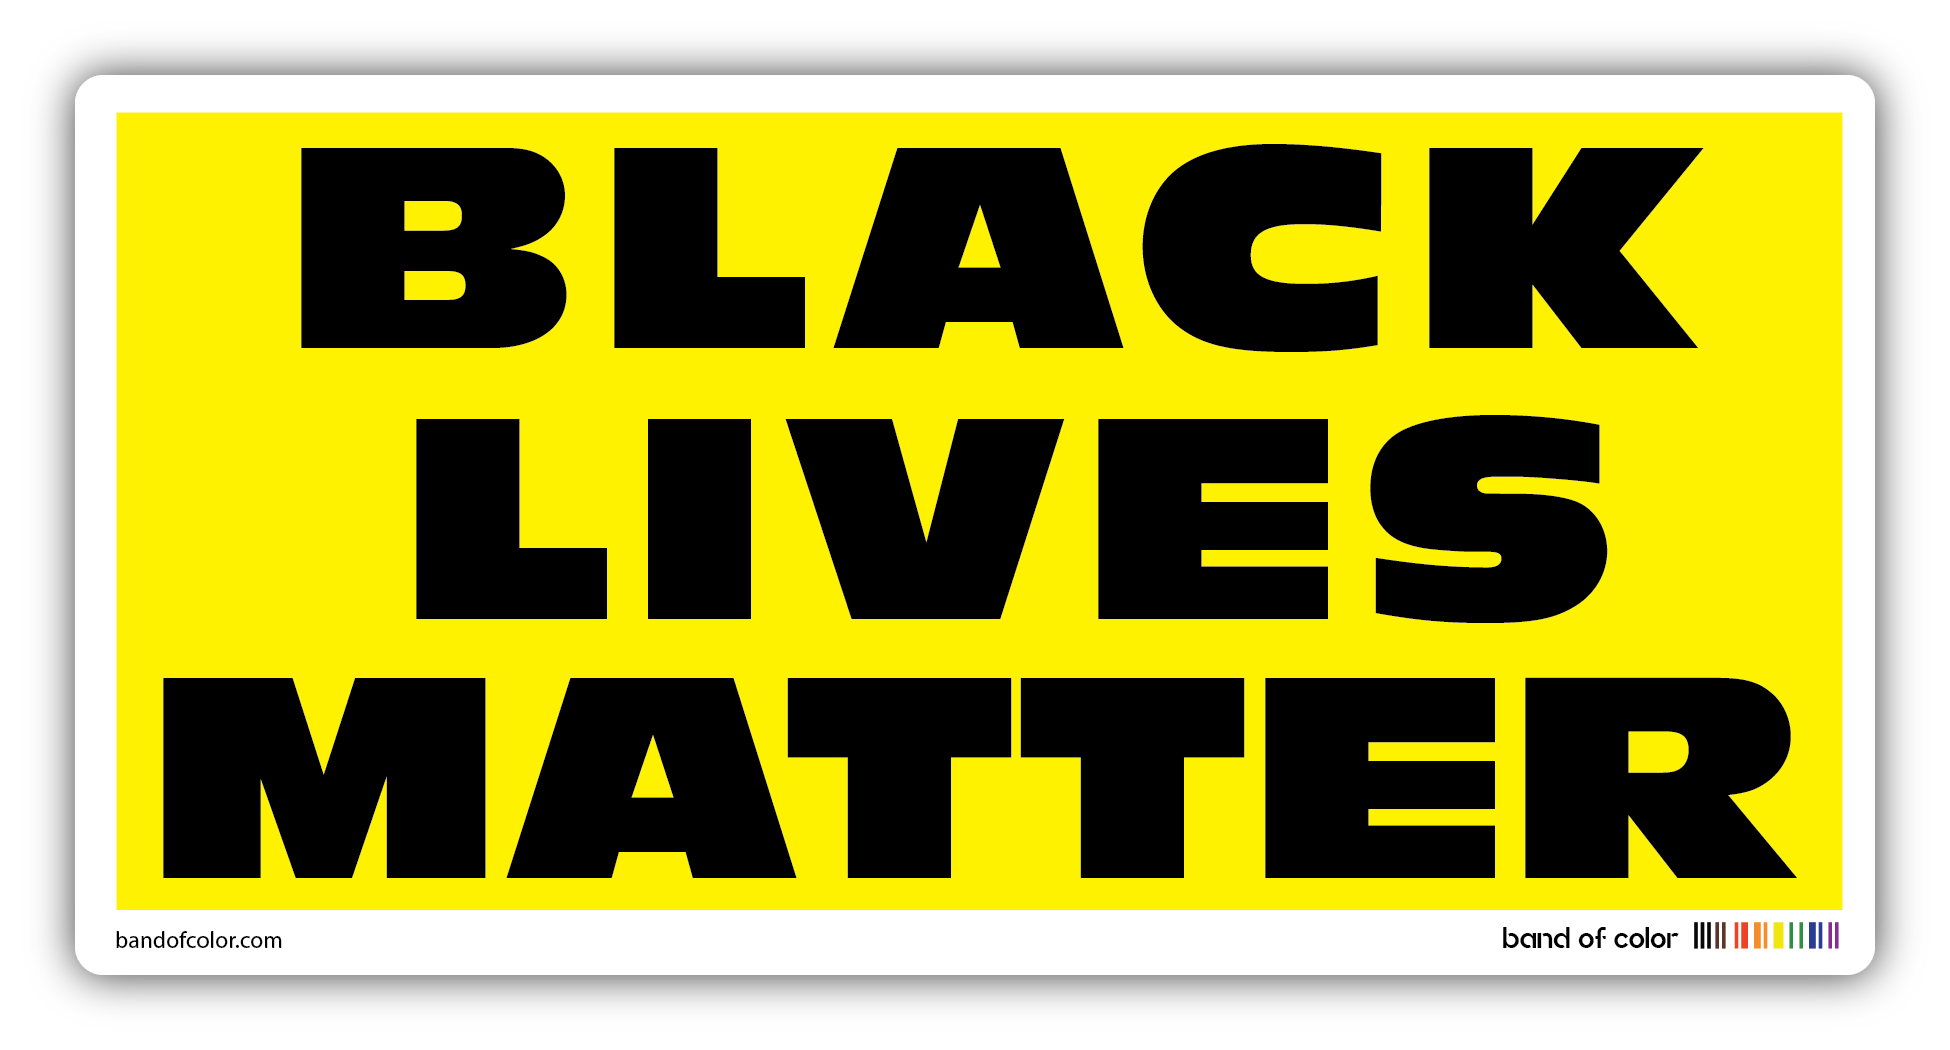 BLACK LIVES MATTER sticker